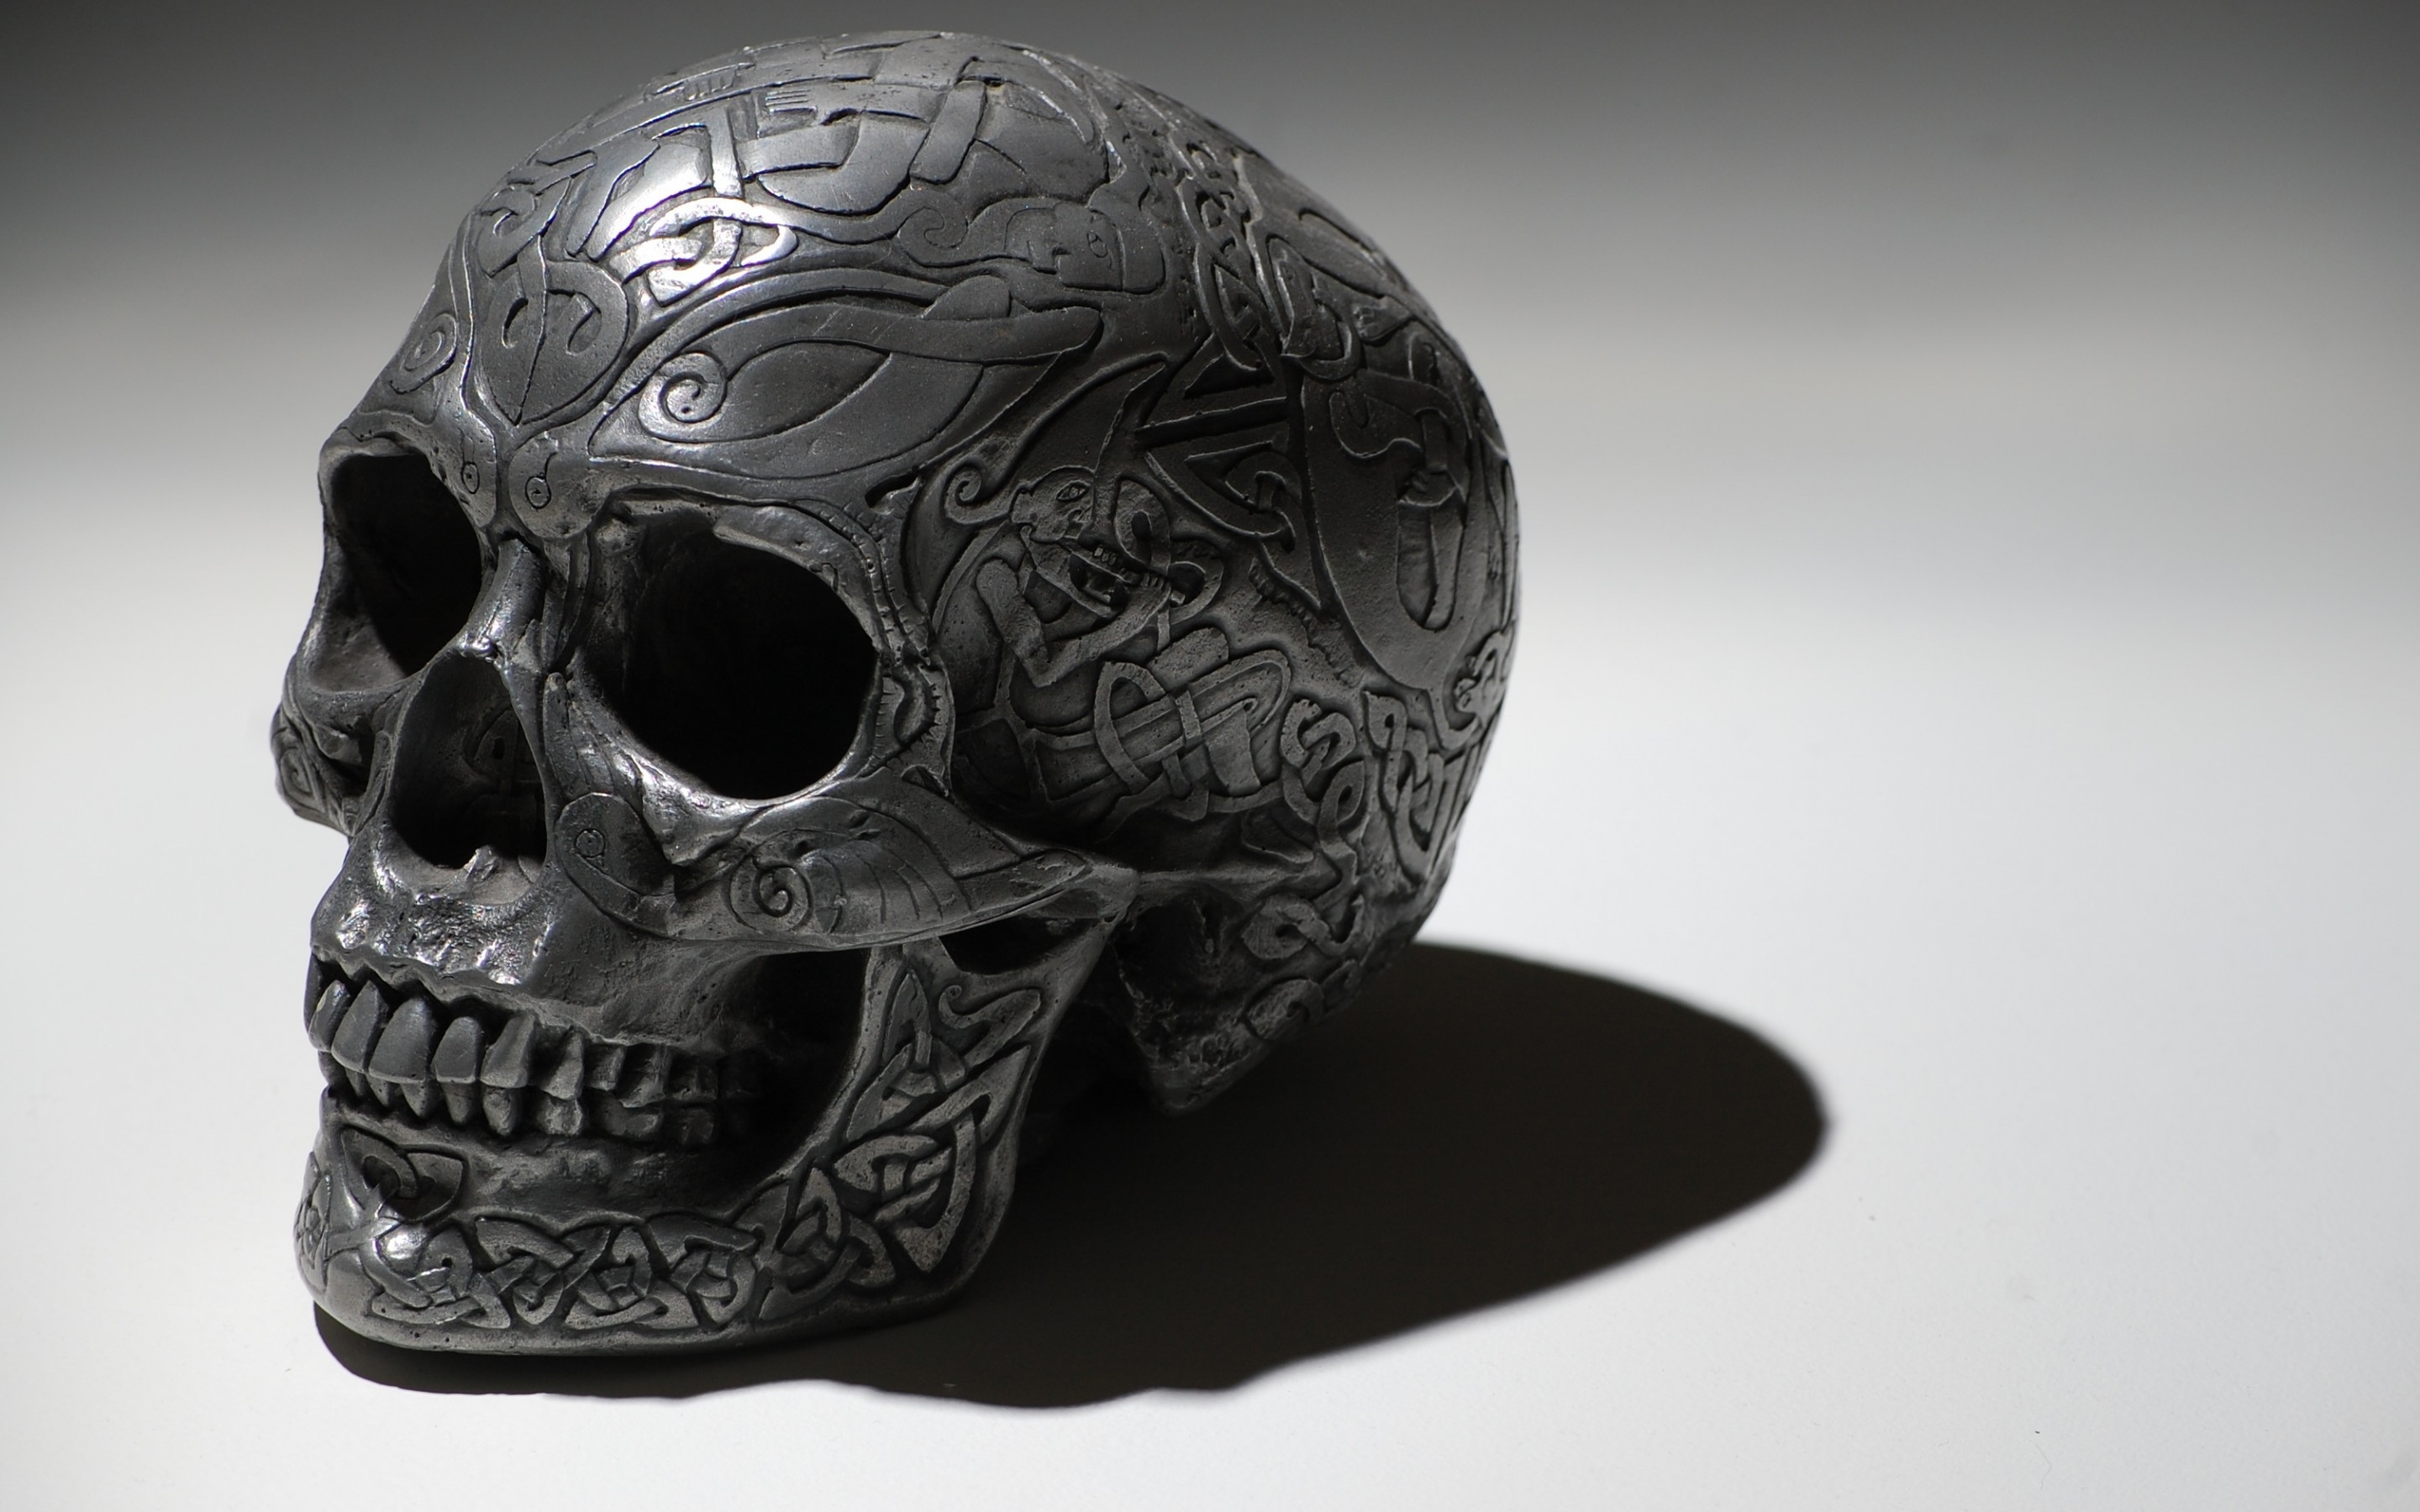 Metal Skull for 2880 x 1800 Retina Display resolution